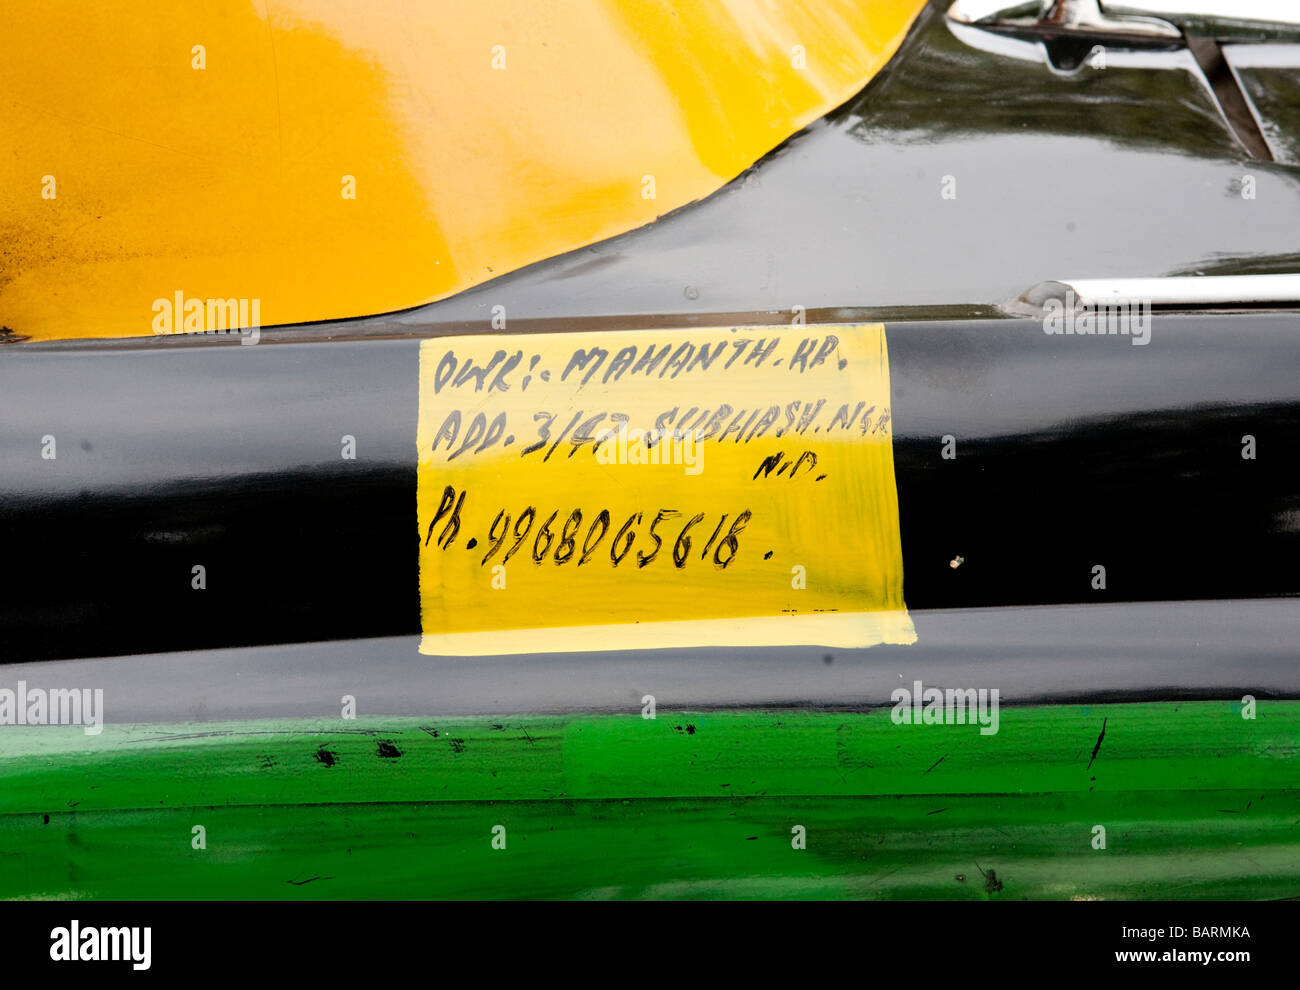 Driver License Plate on Traditional Delhi Ambassador Taxi New Delhi India Stock Photo